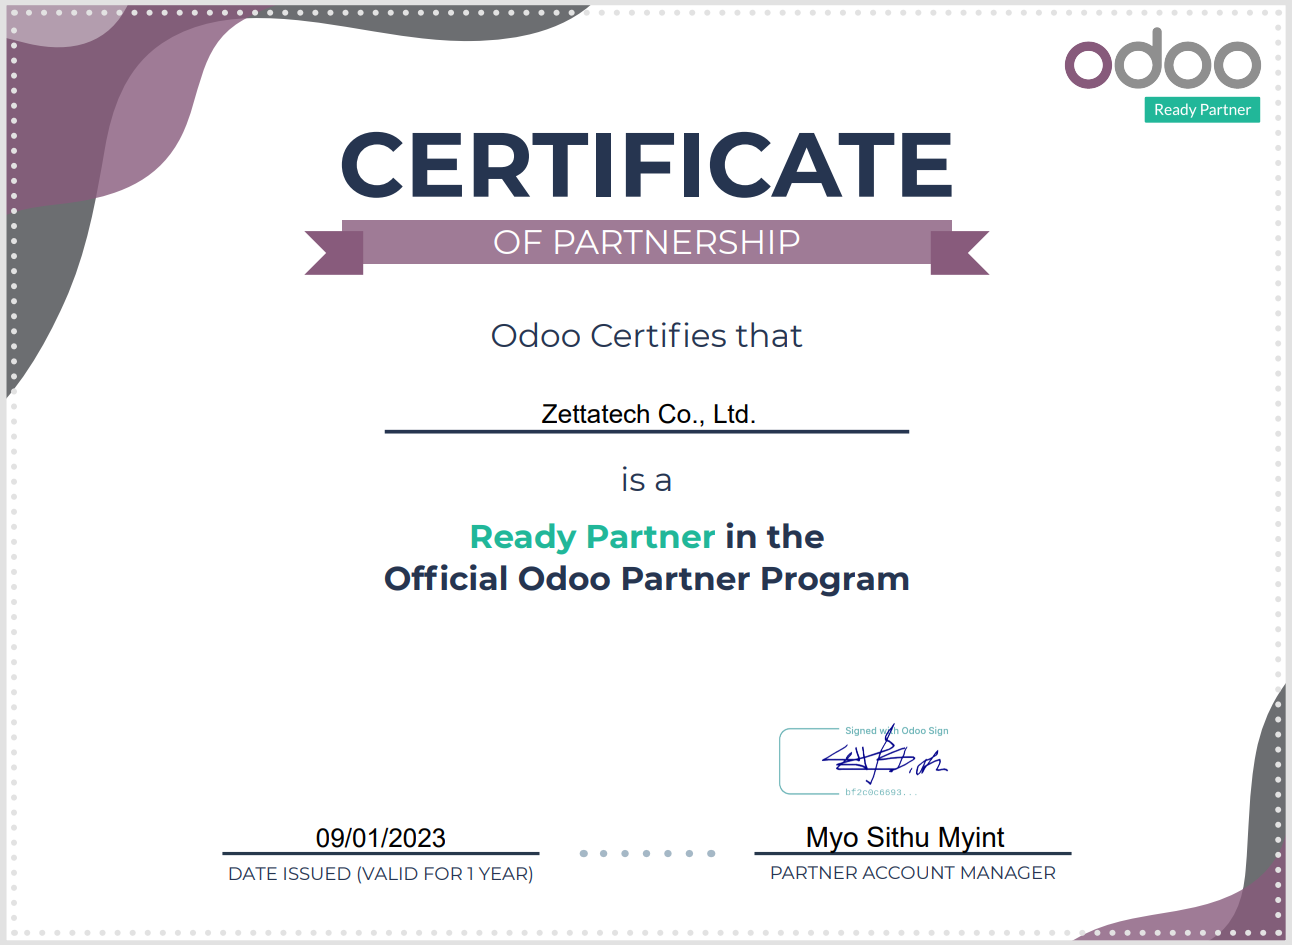 odoo certificate